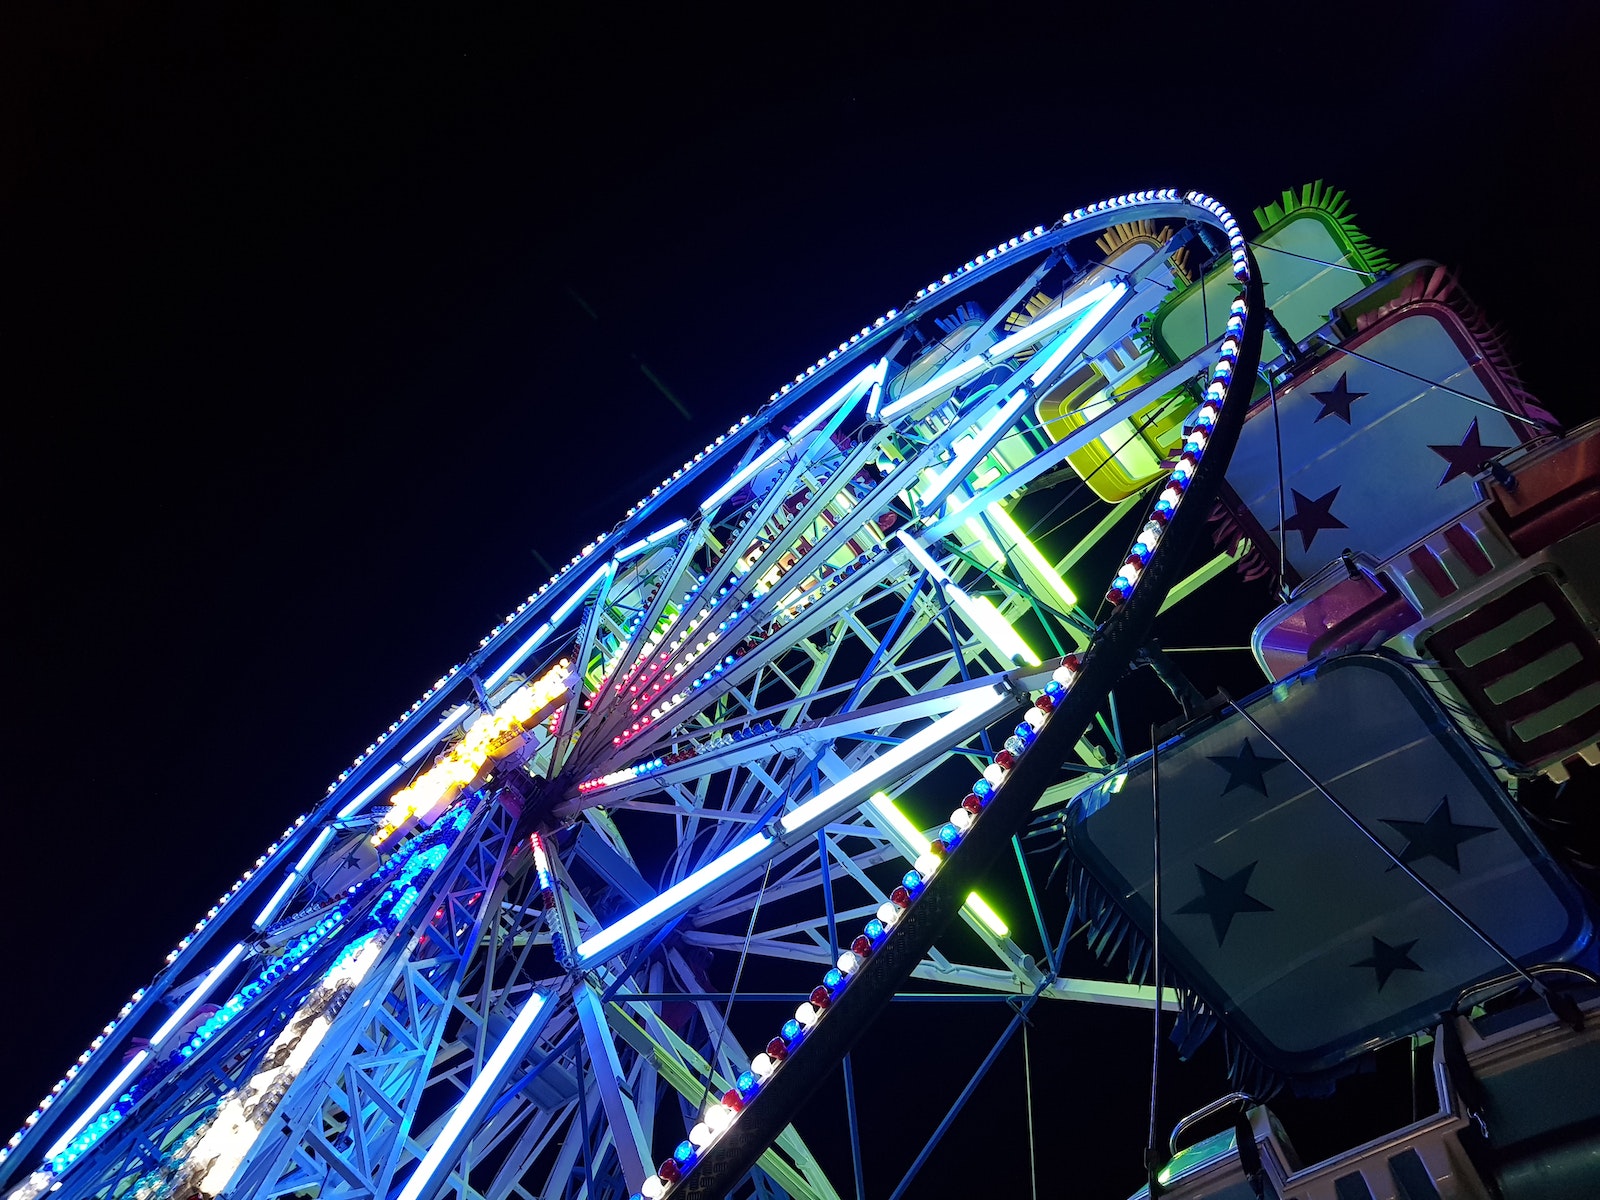 Ferris Wheel Under Black Sky during Nighttime